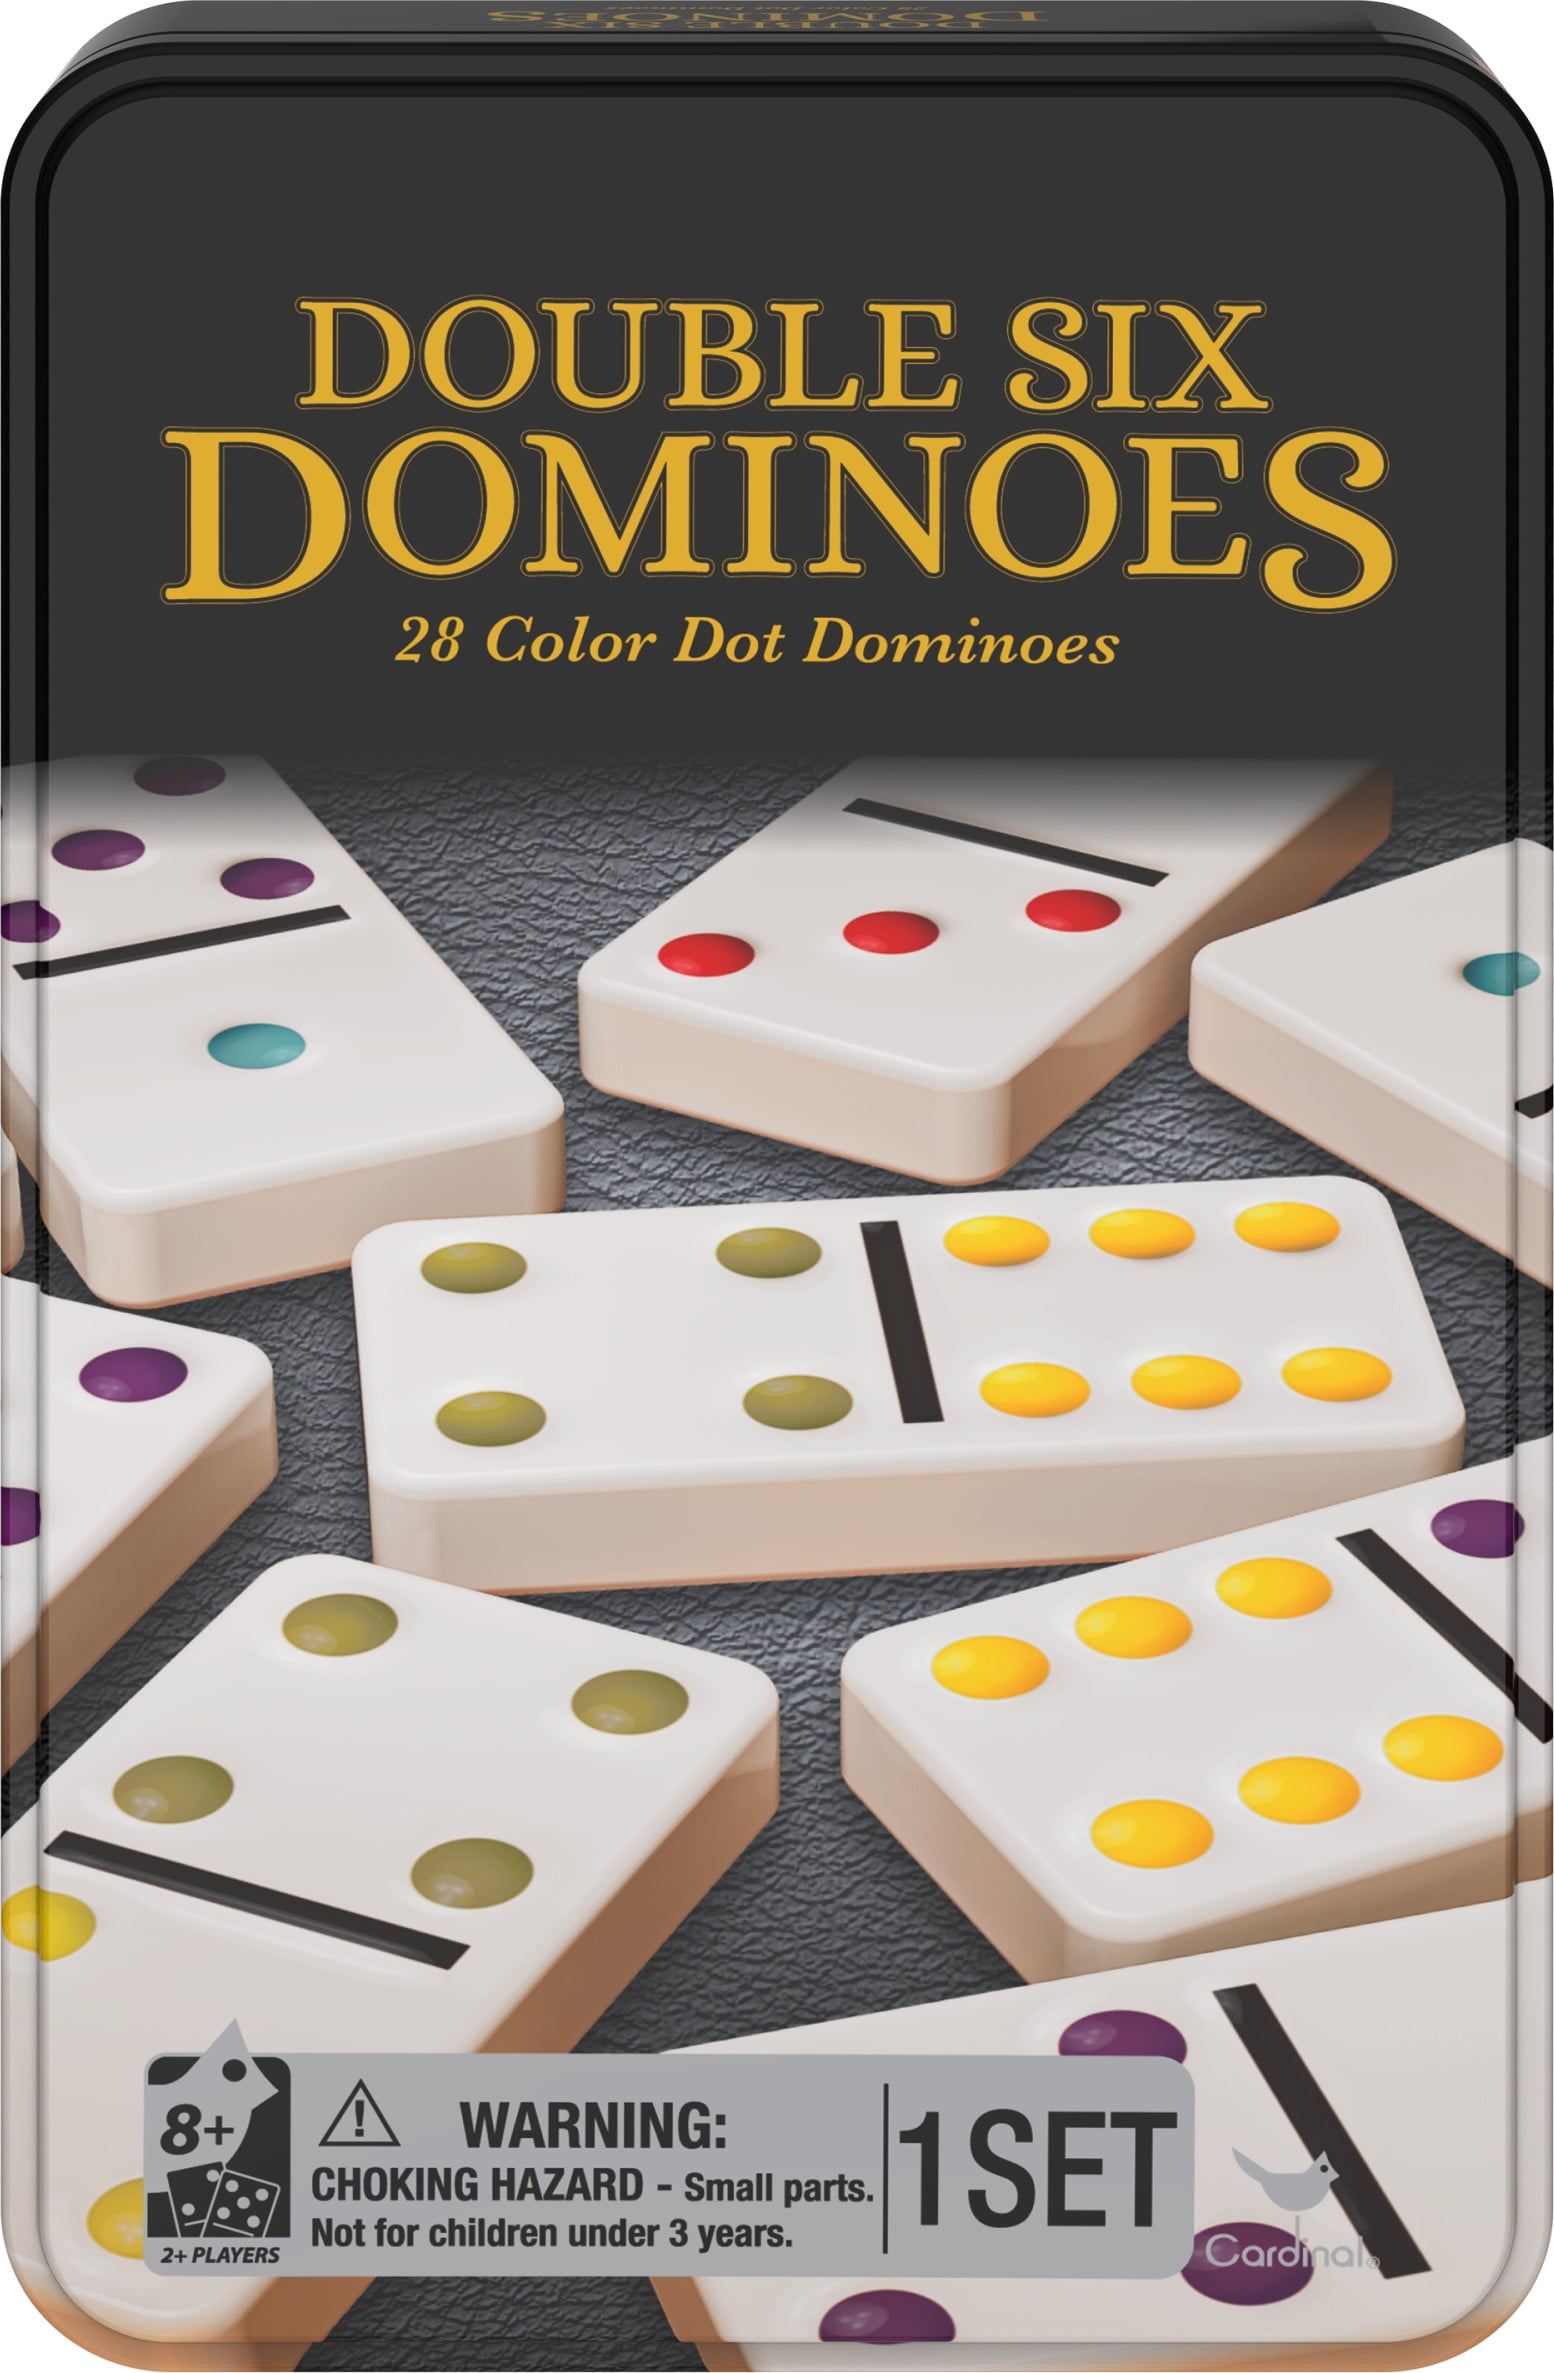 DOUBLE SIX Color Dot DOMINOES SET 28 Piece Game BONES portable TRAVEL SIZED new 